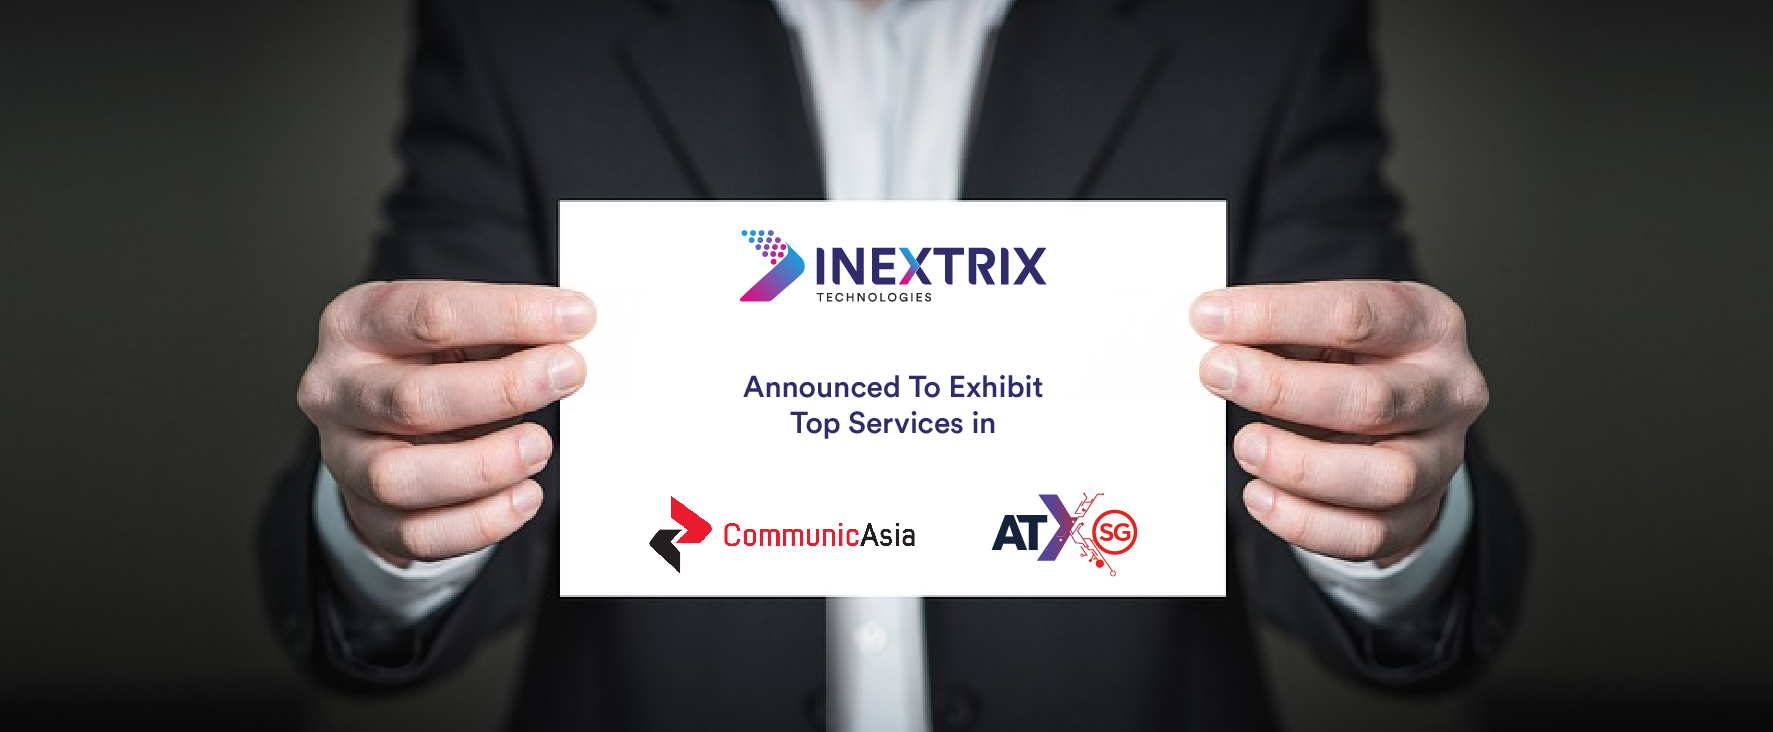 Inextrix Announced To